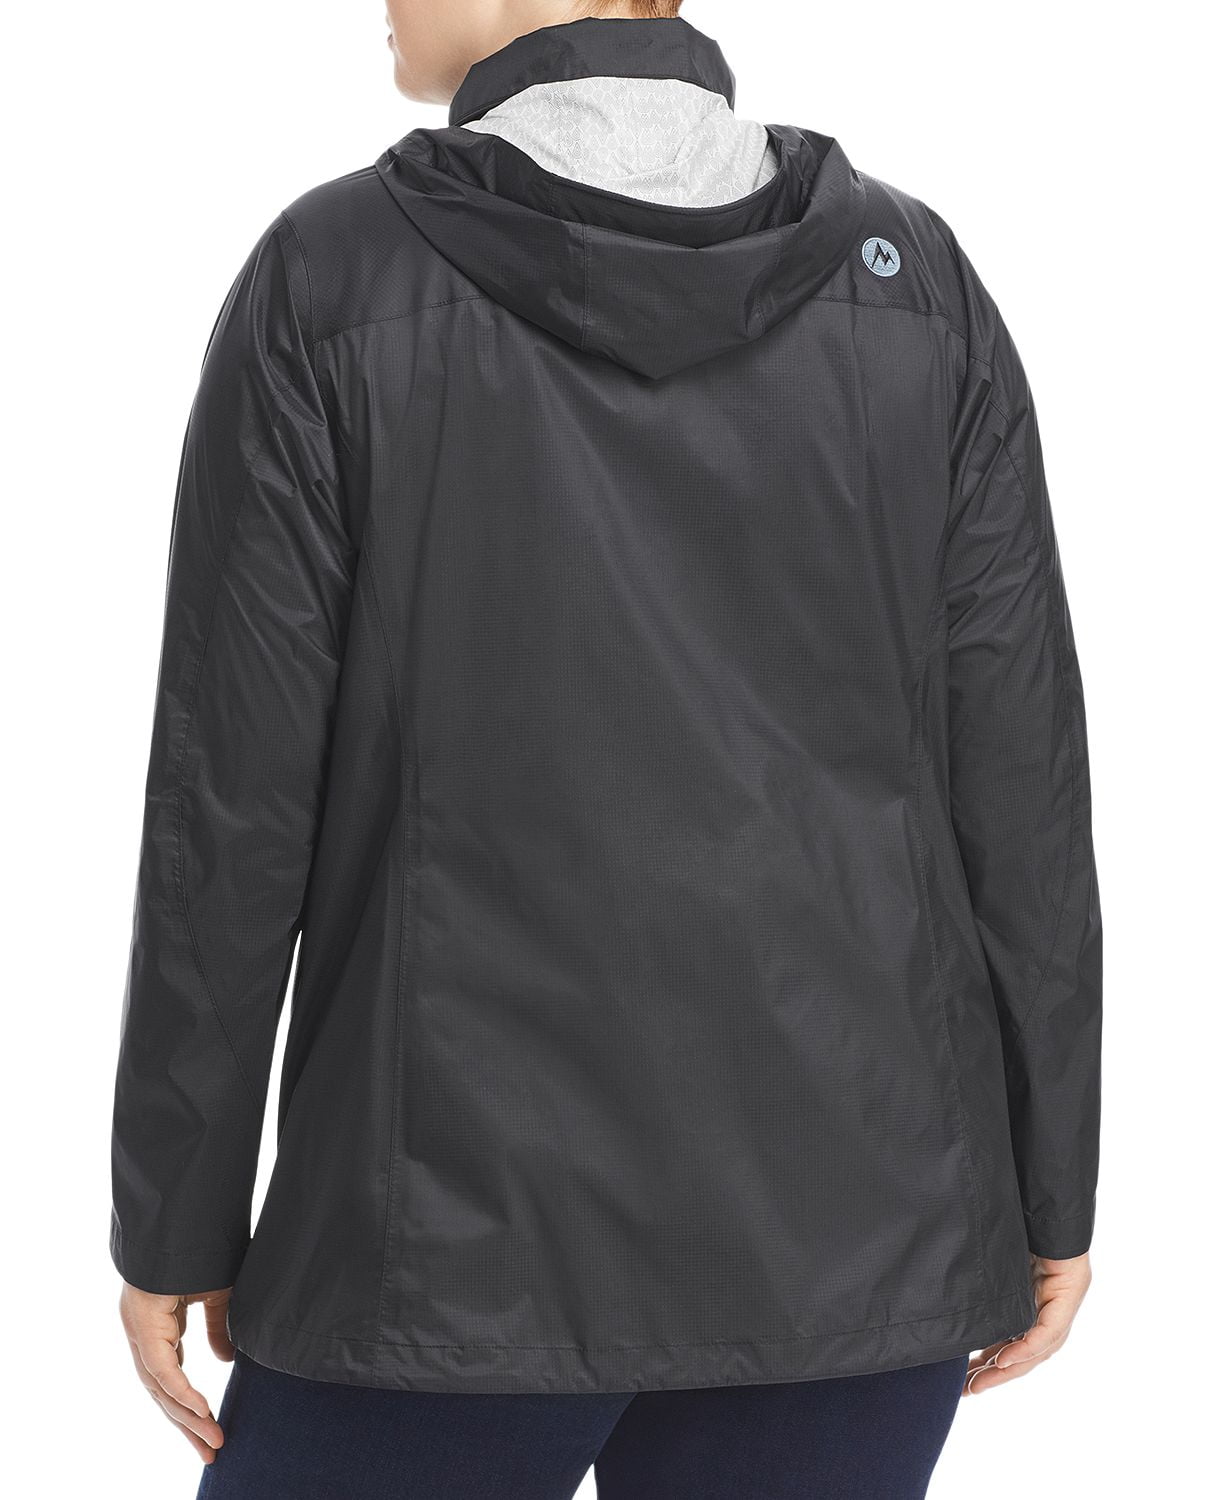 www.couturepoint.com-marmot-womens-plus-size-black-nanopro-hooded-waterproof-jacket